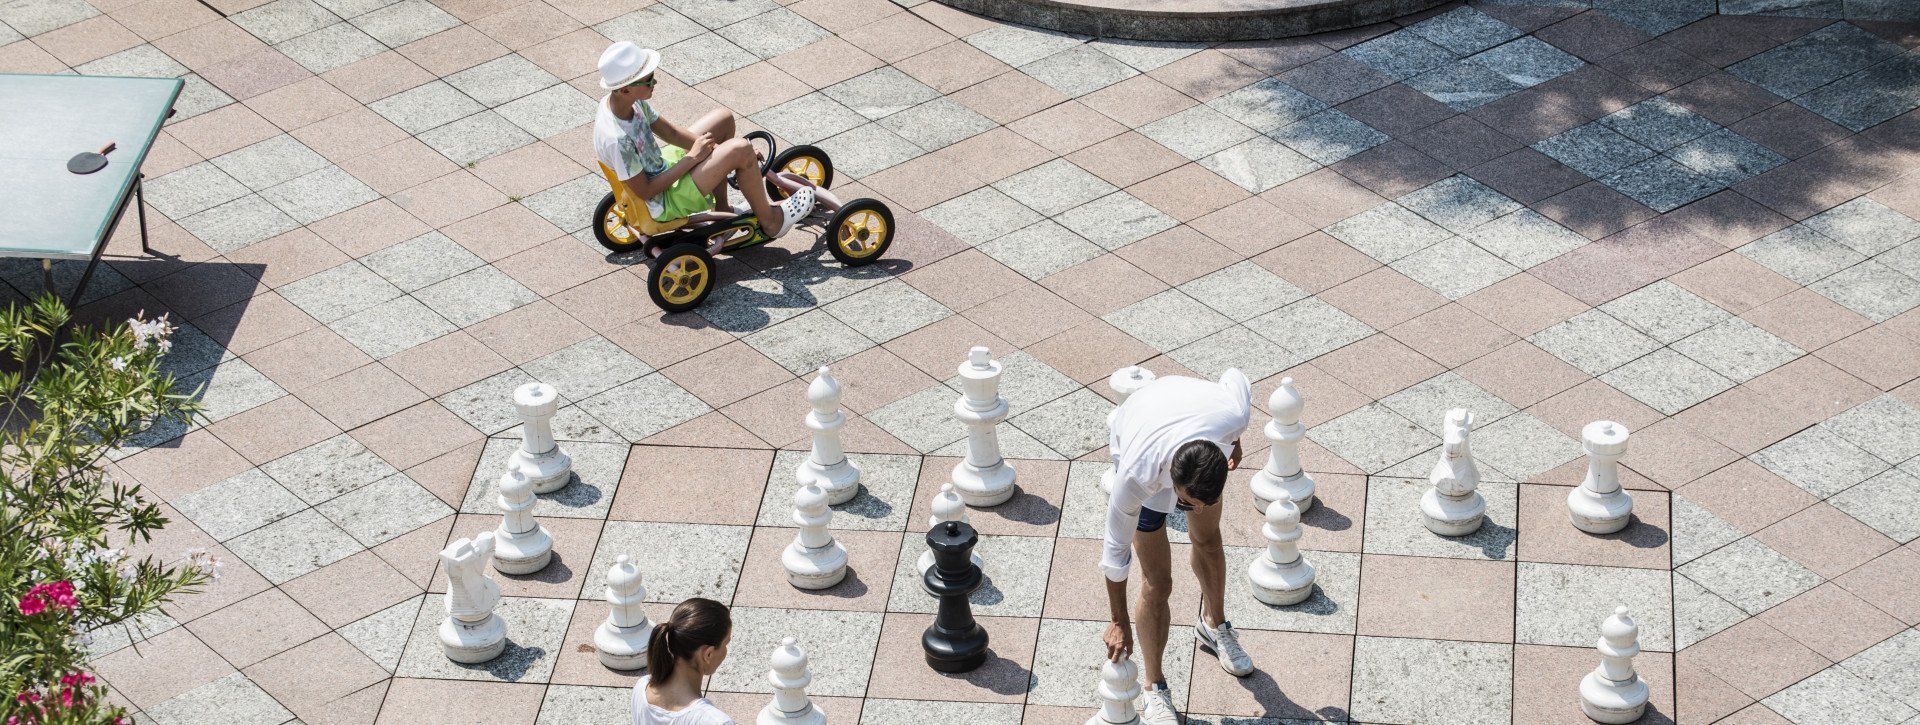 Street chess at International au Lac Historic Lakeside Hotel